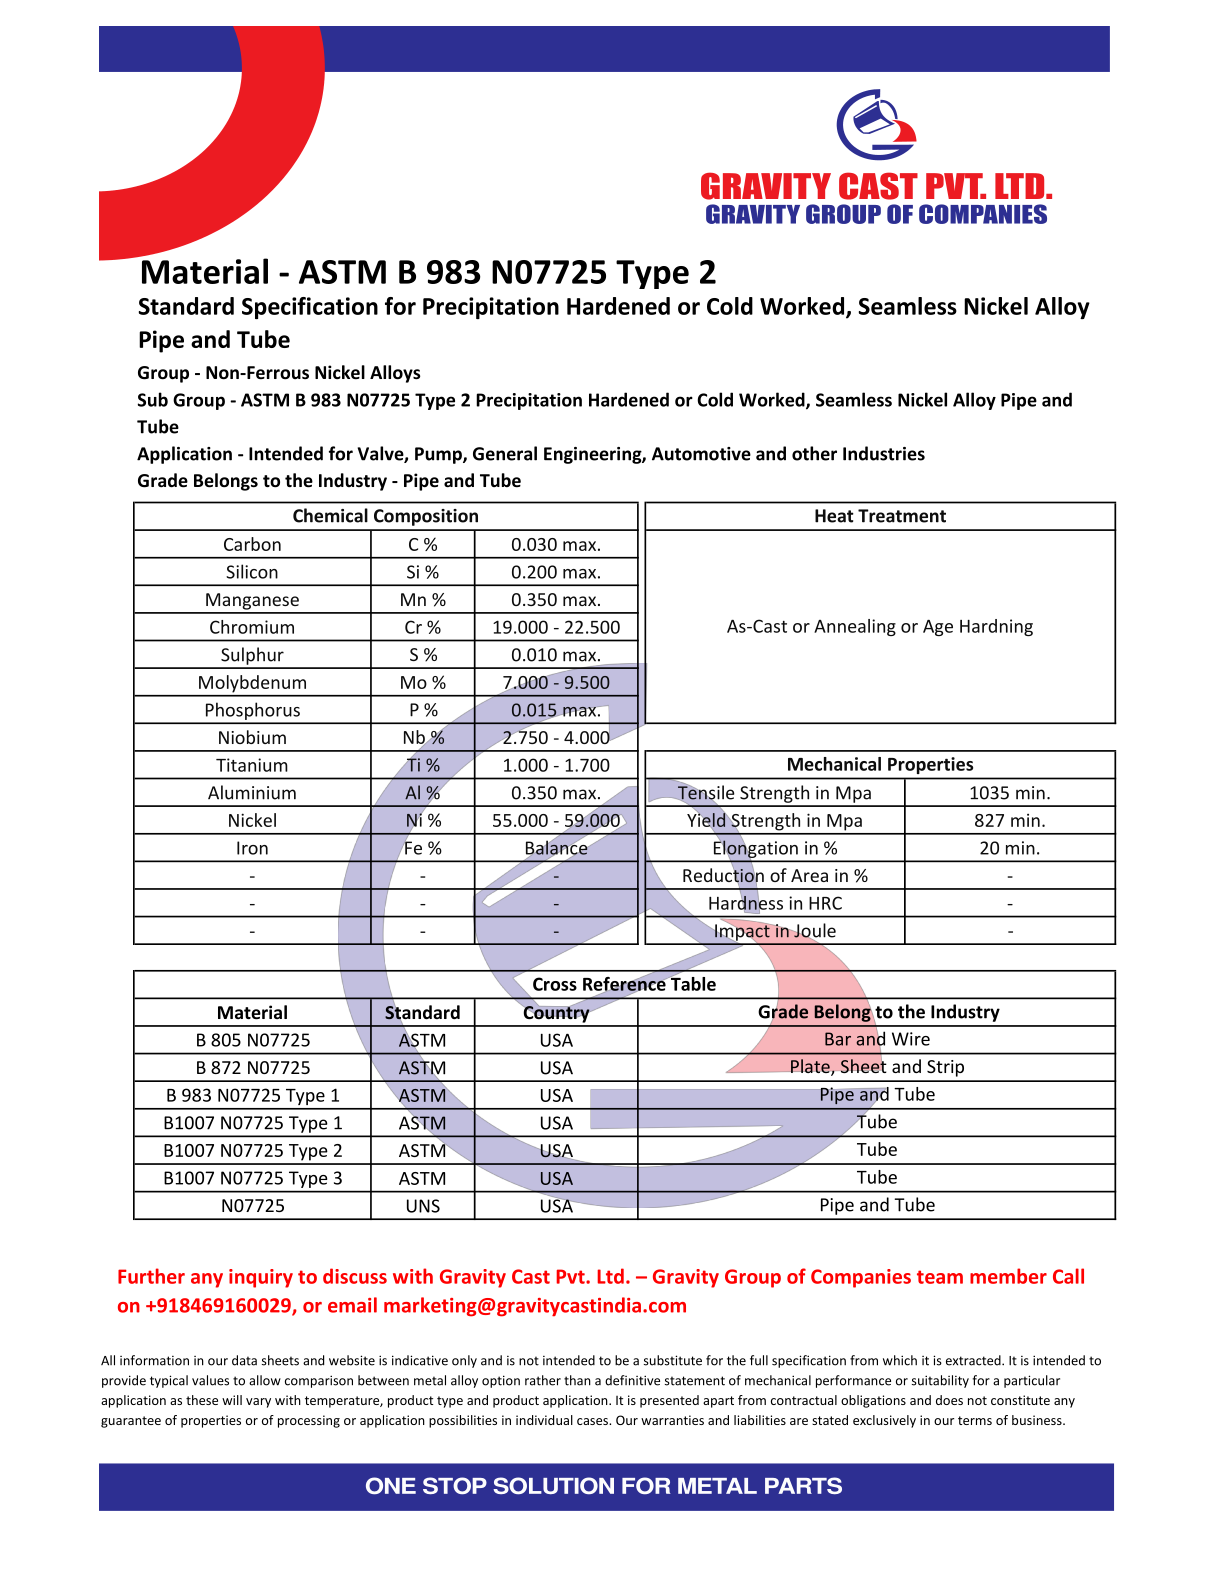 ASTM B 983 N07725 Type 2.pdf